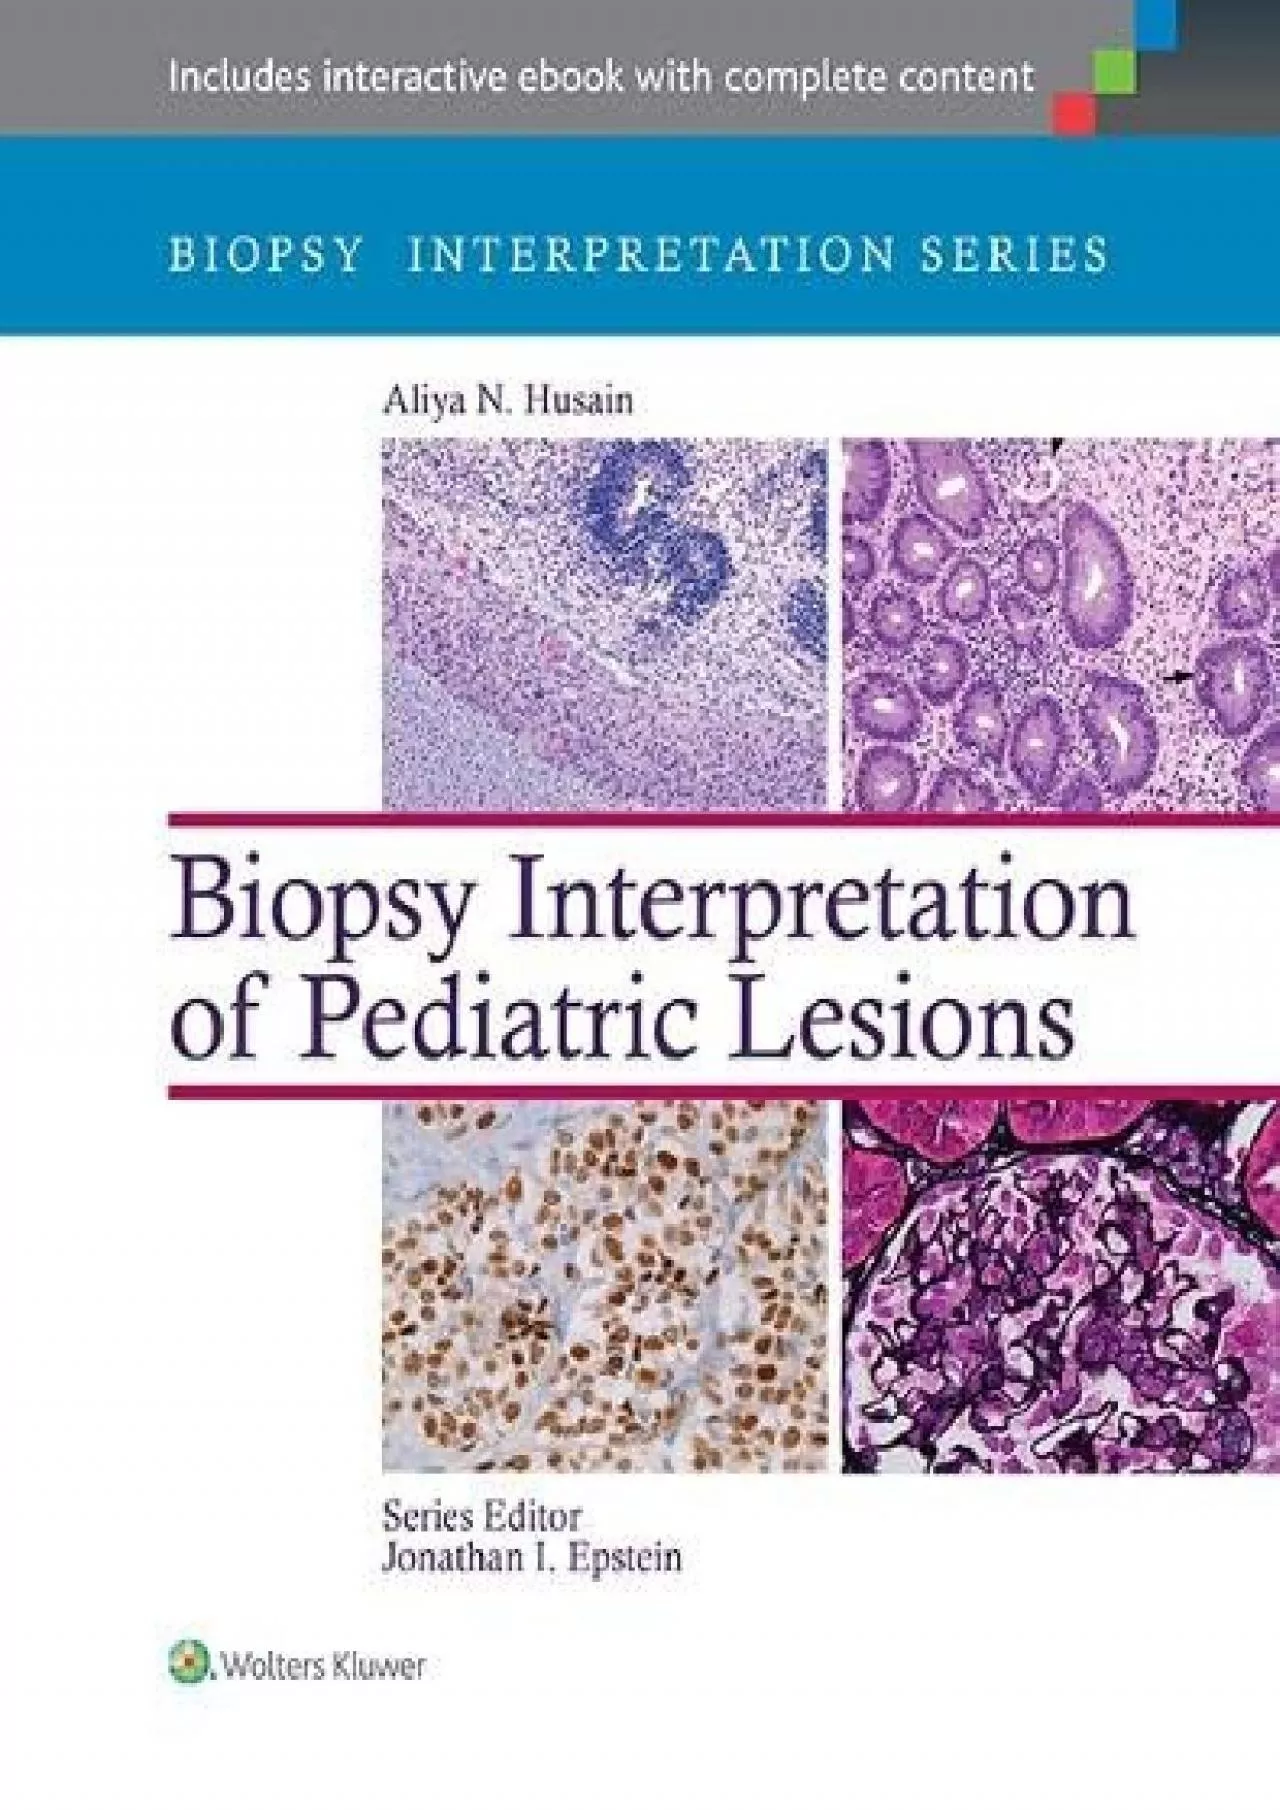 (BOOK)-Biopsy Interpretation of Pediatric Lesions (Biopsy Interpretation Series)